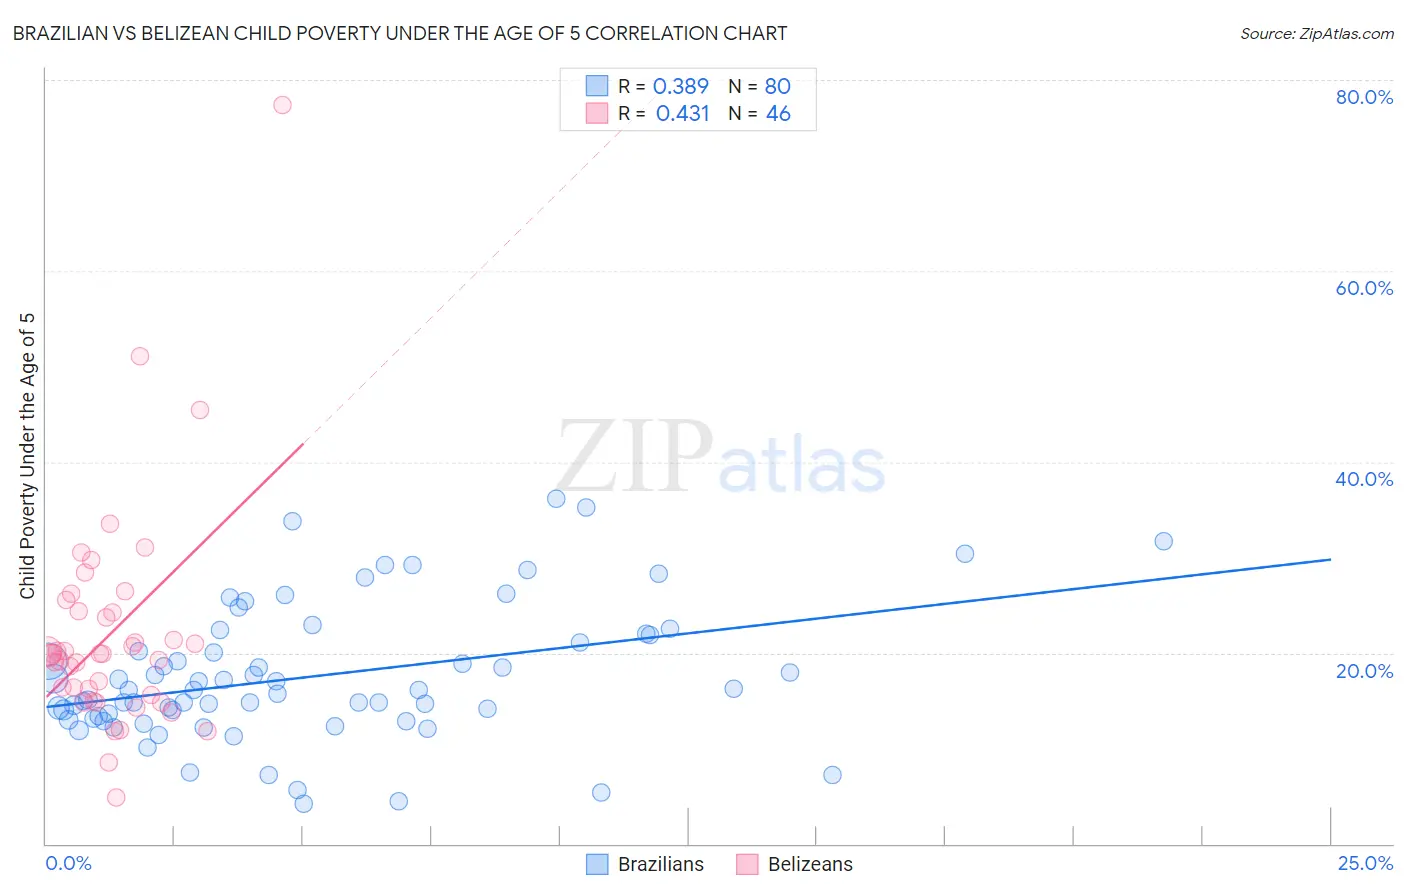 Brazilian vs Belizean Child Poverty Under the Age of 5